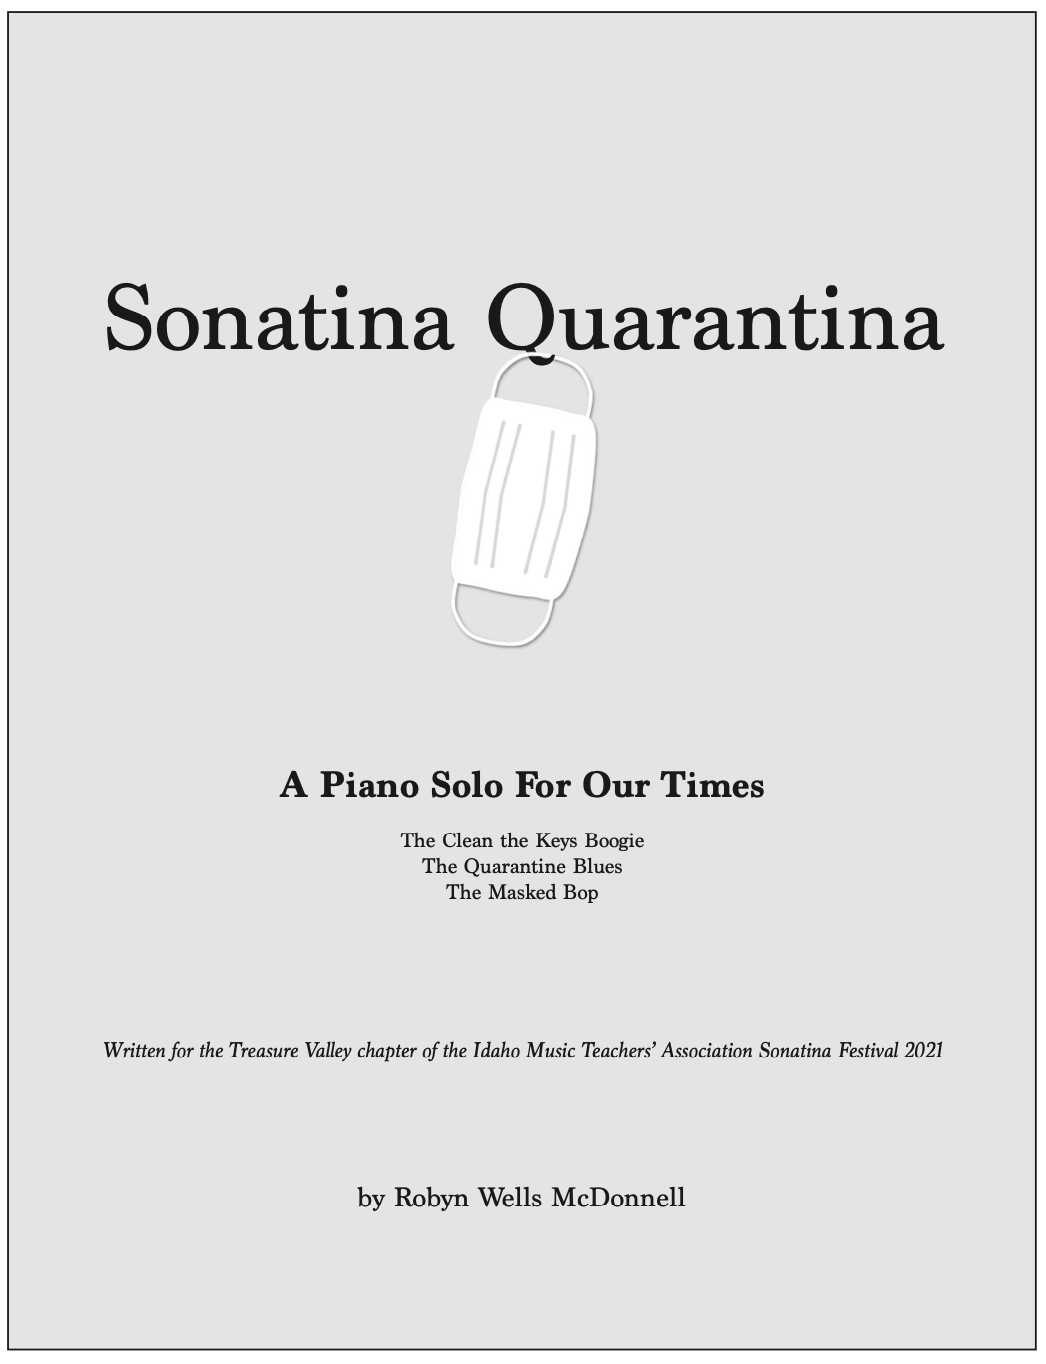 Sonatina Quarantina: A Piano Solo For Our Times